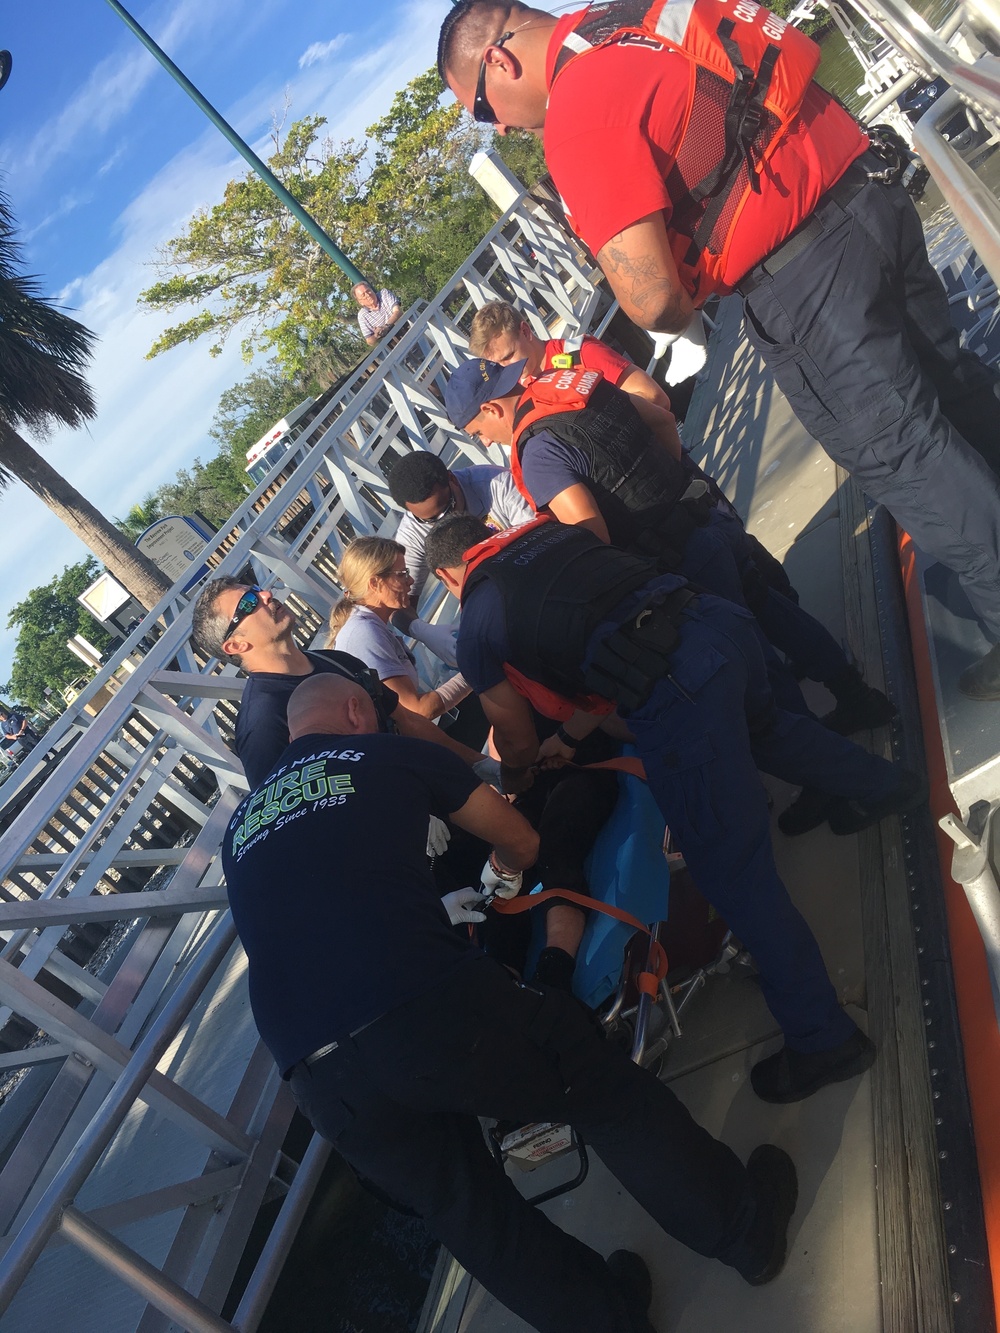 Coast Guard medevacs diver 31 miles west of Naples, Florida